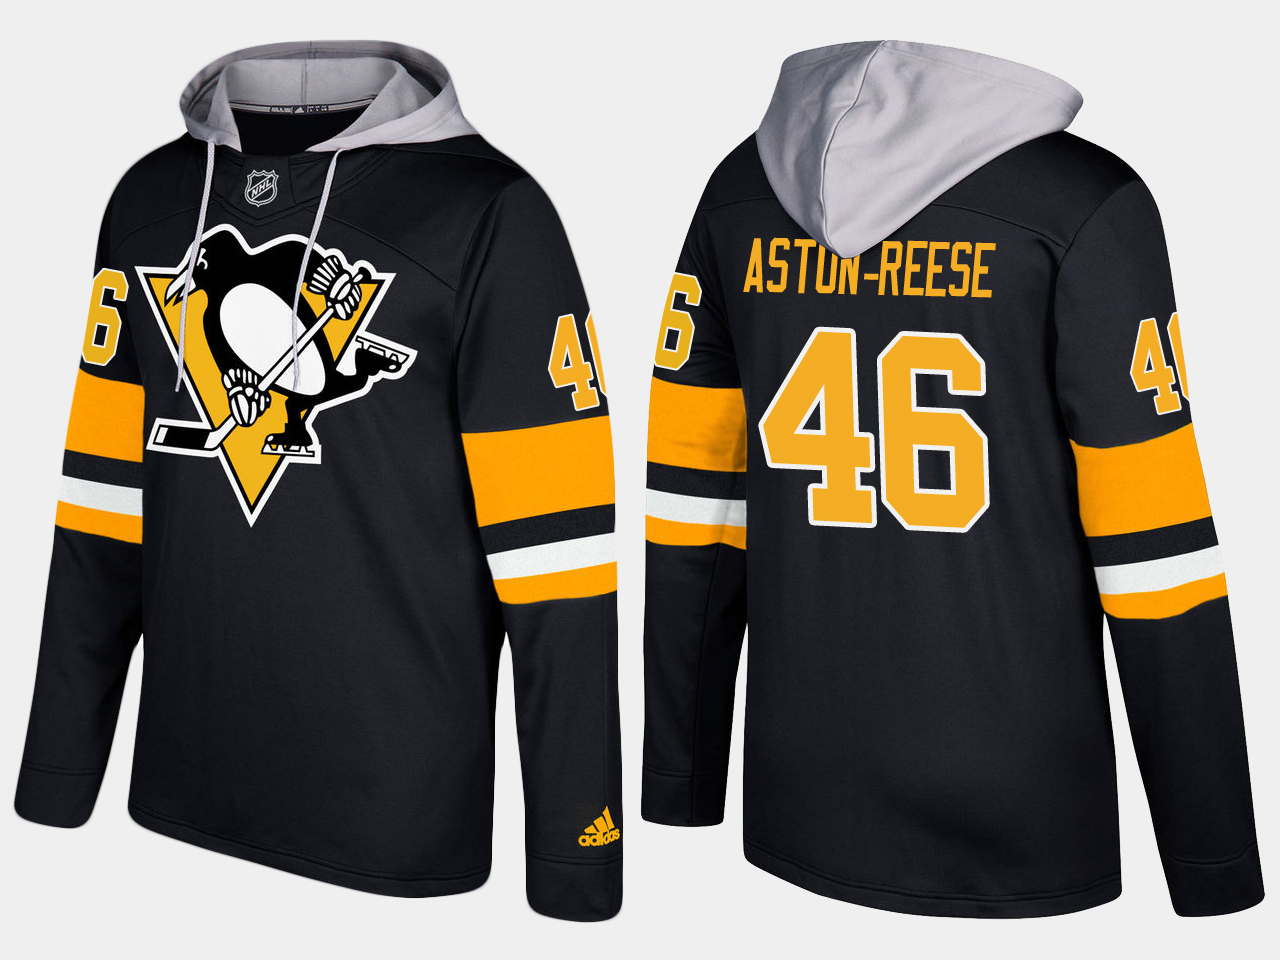 Men NHL Pittsburgh penguins #46 zach aston reese black hoodie